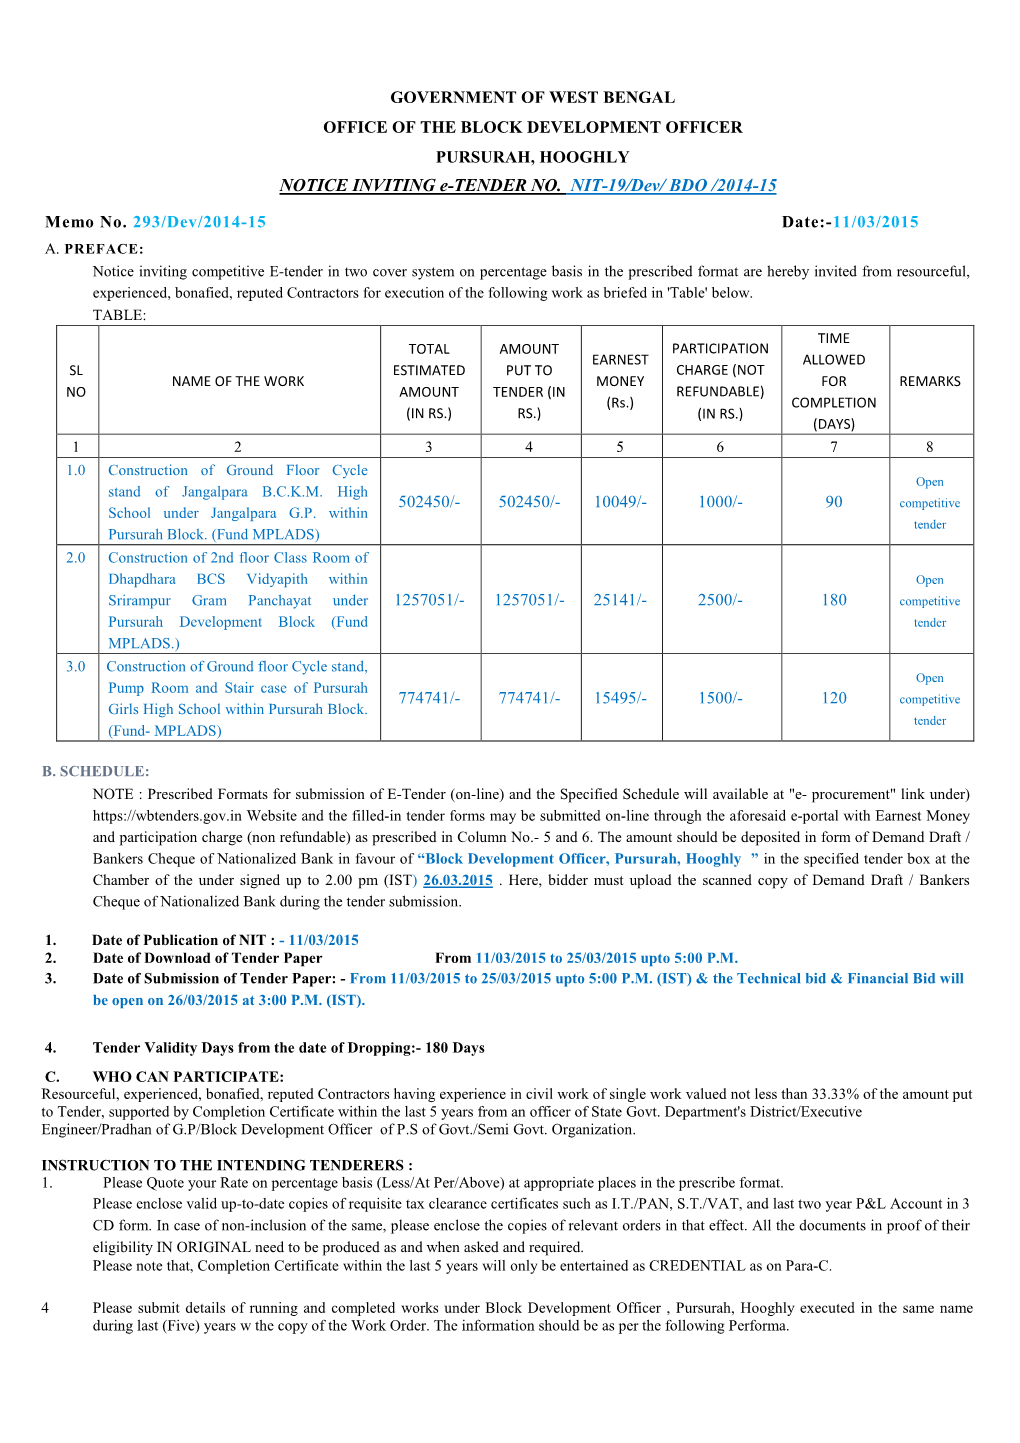 NOTICE INVITING E-TENDER NO. NIT-19/Dev/ BDO /2014-15